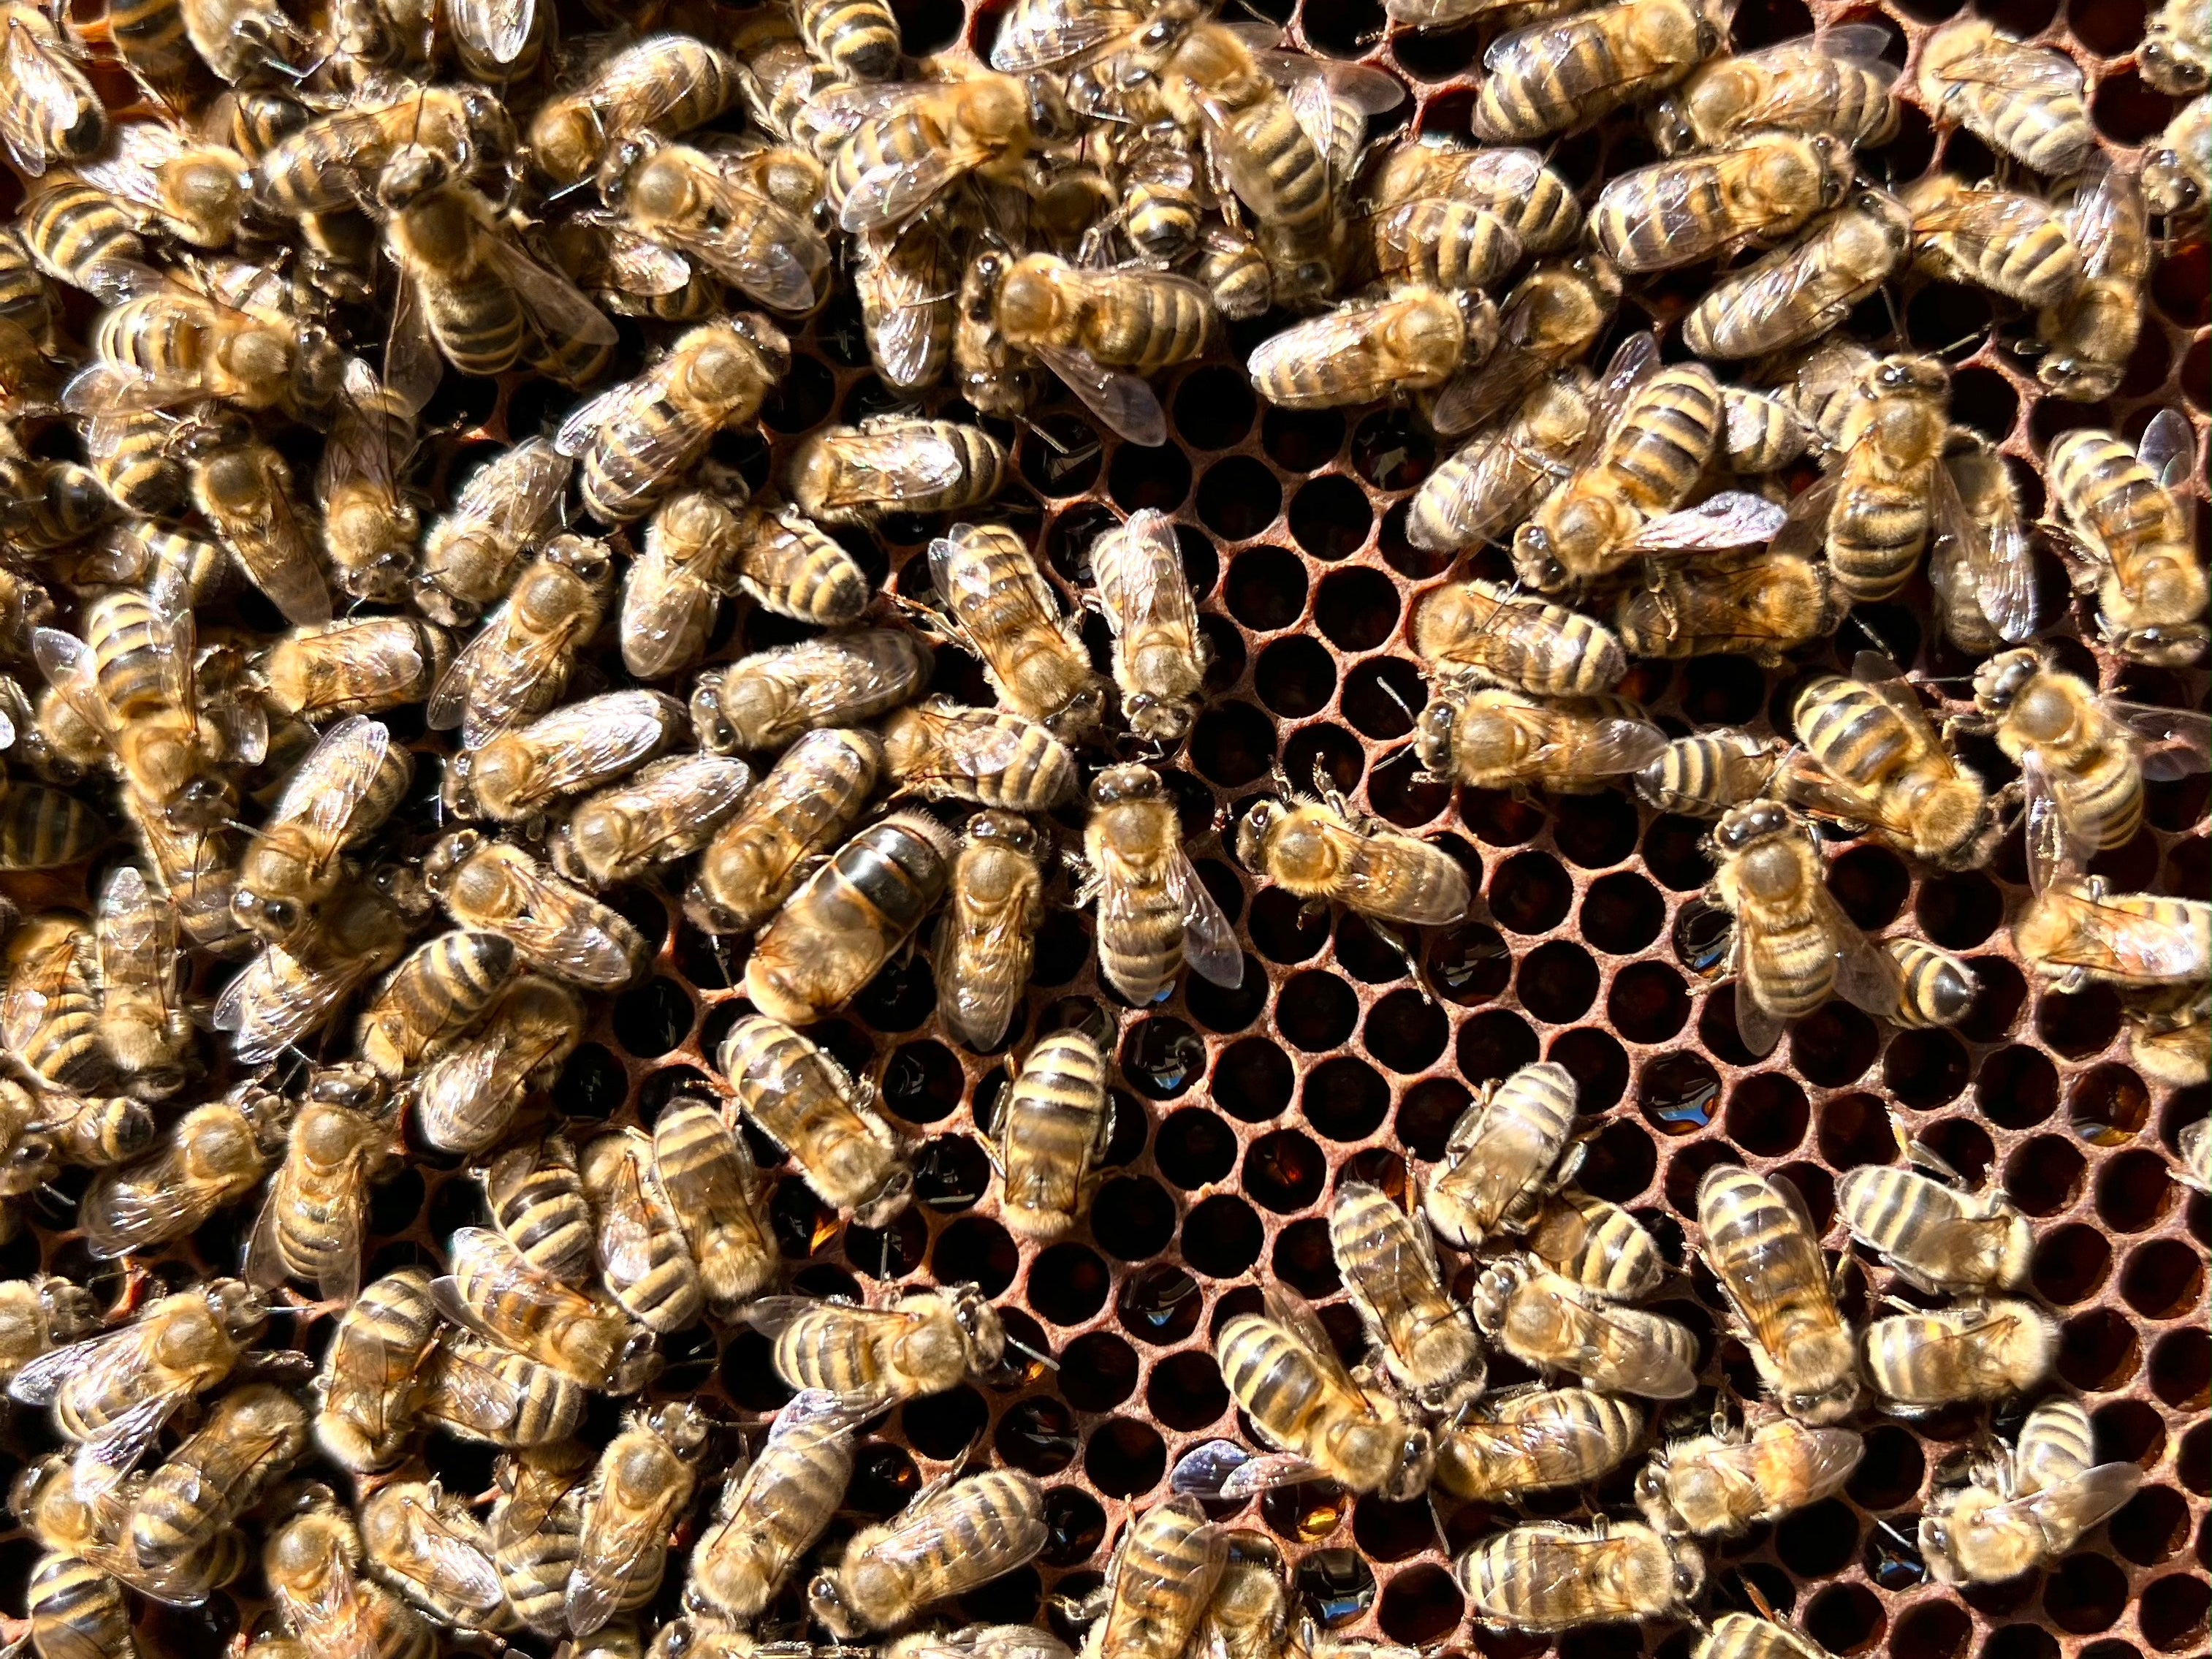 Evaluating your bee season